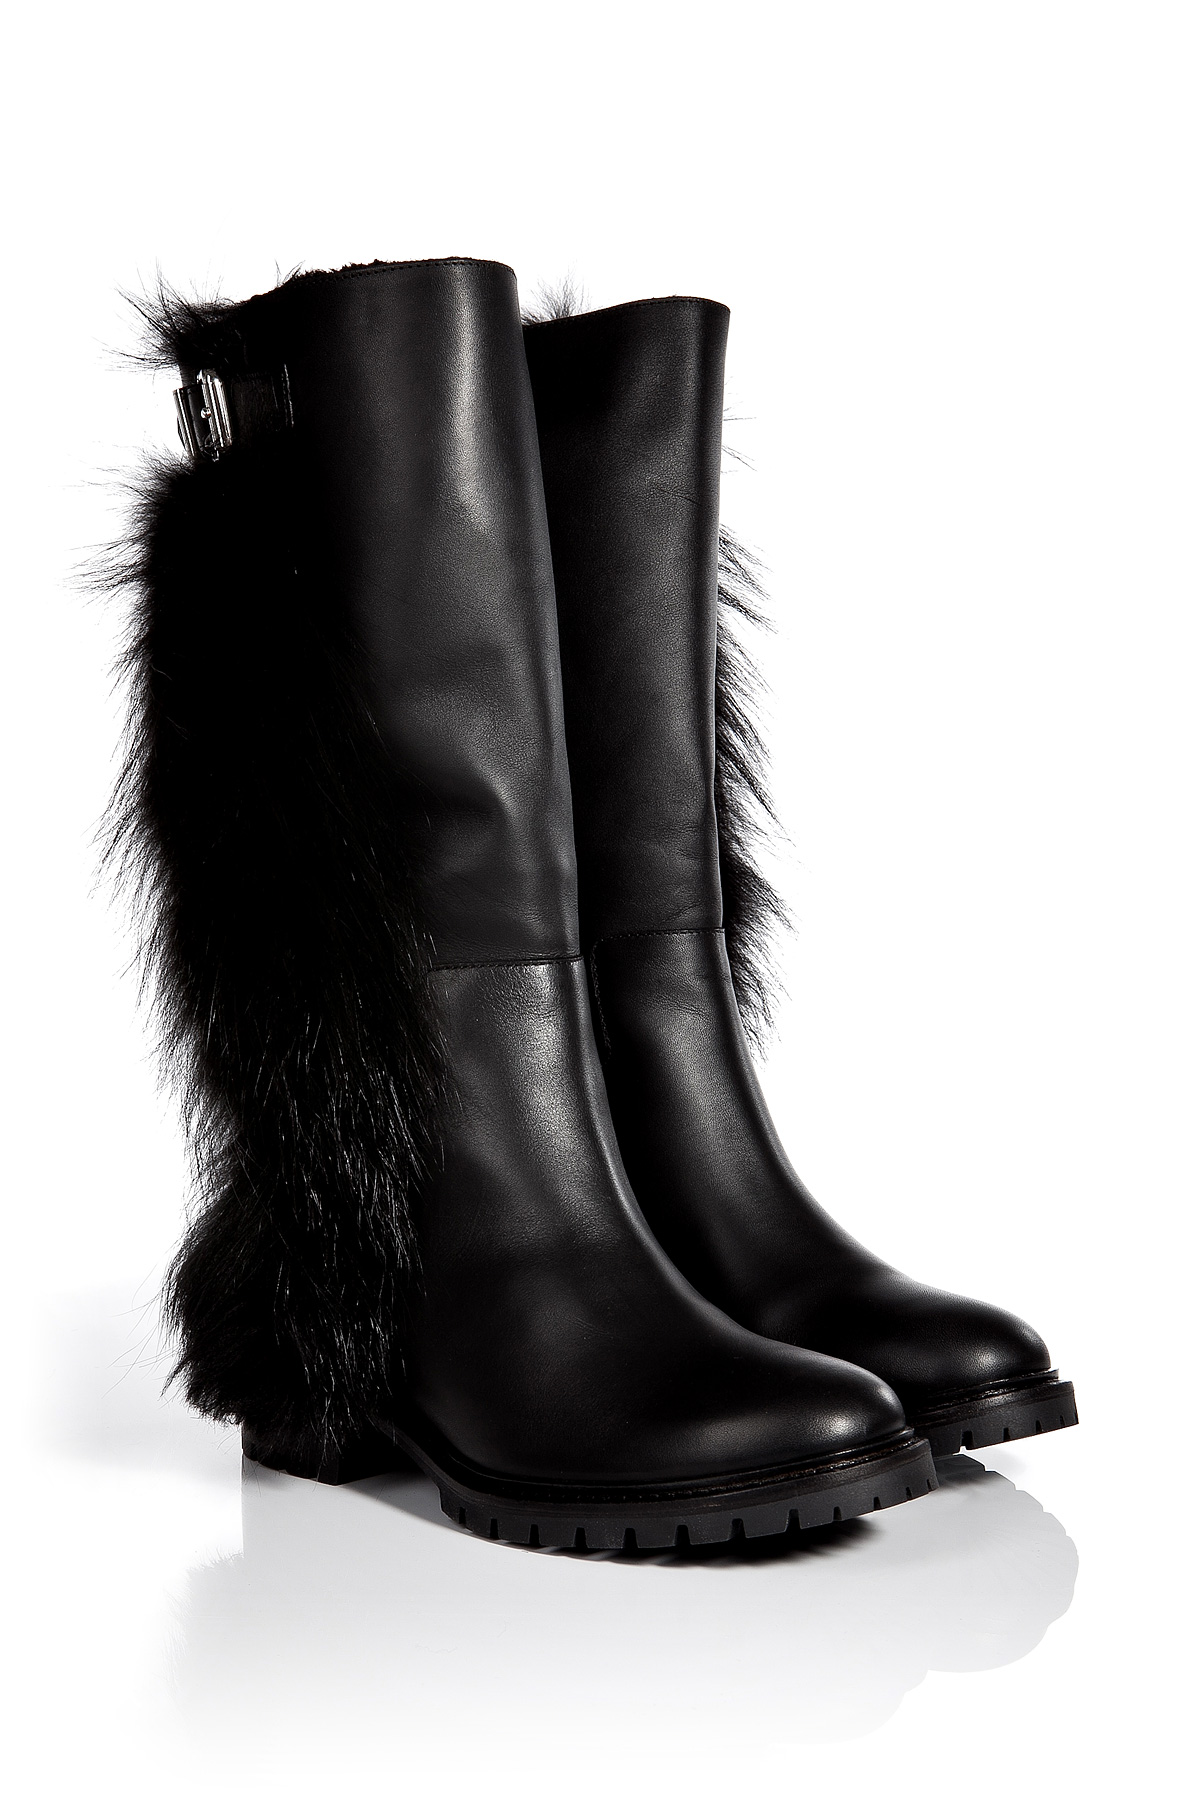 FENDI fur trimmed black leather boots